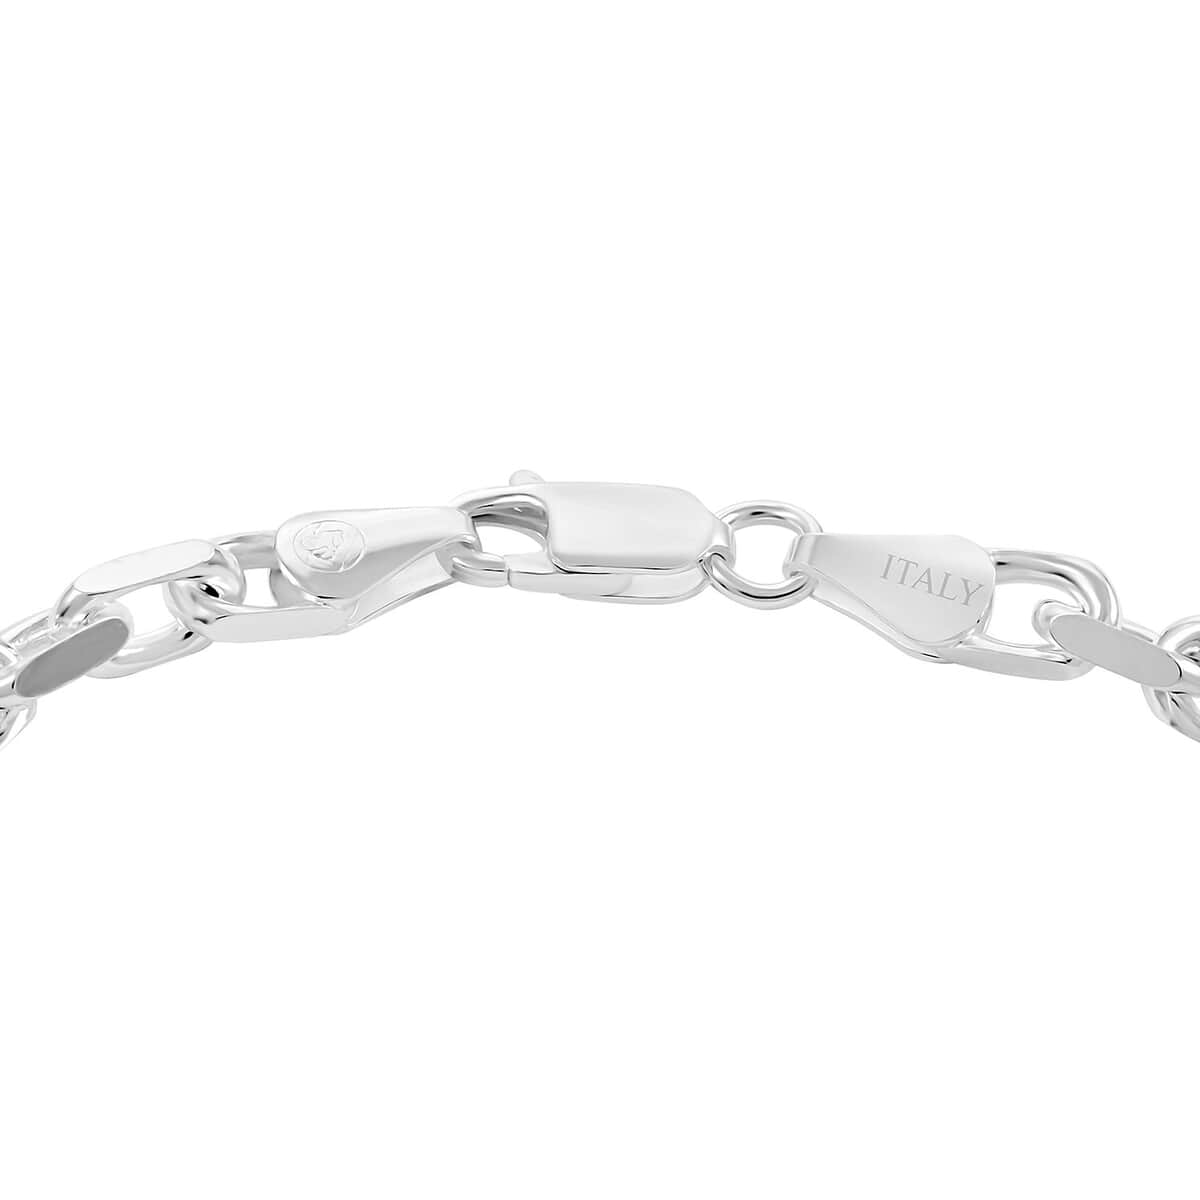 Buy Terahertz Beaded Stretch Bracelet, Pixiu Beads Bracelet,Terahertz Bracelet  , Beads Bracelet 102.60 ctw at ShopLC.